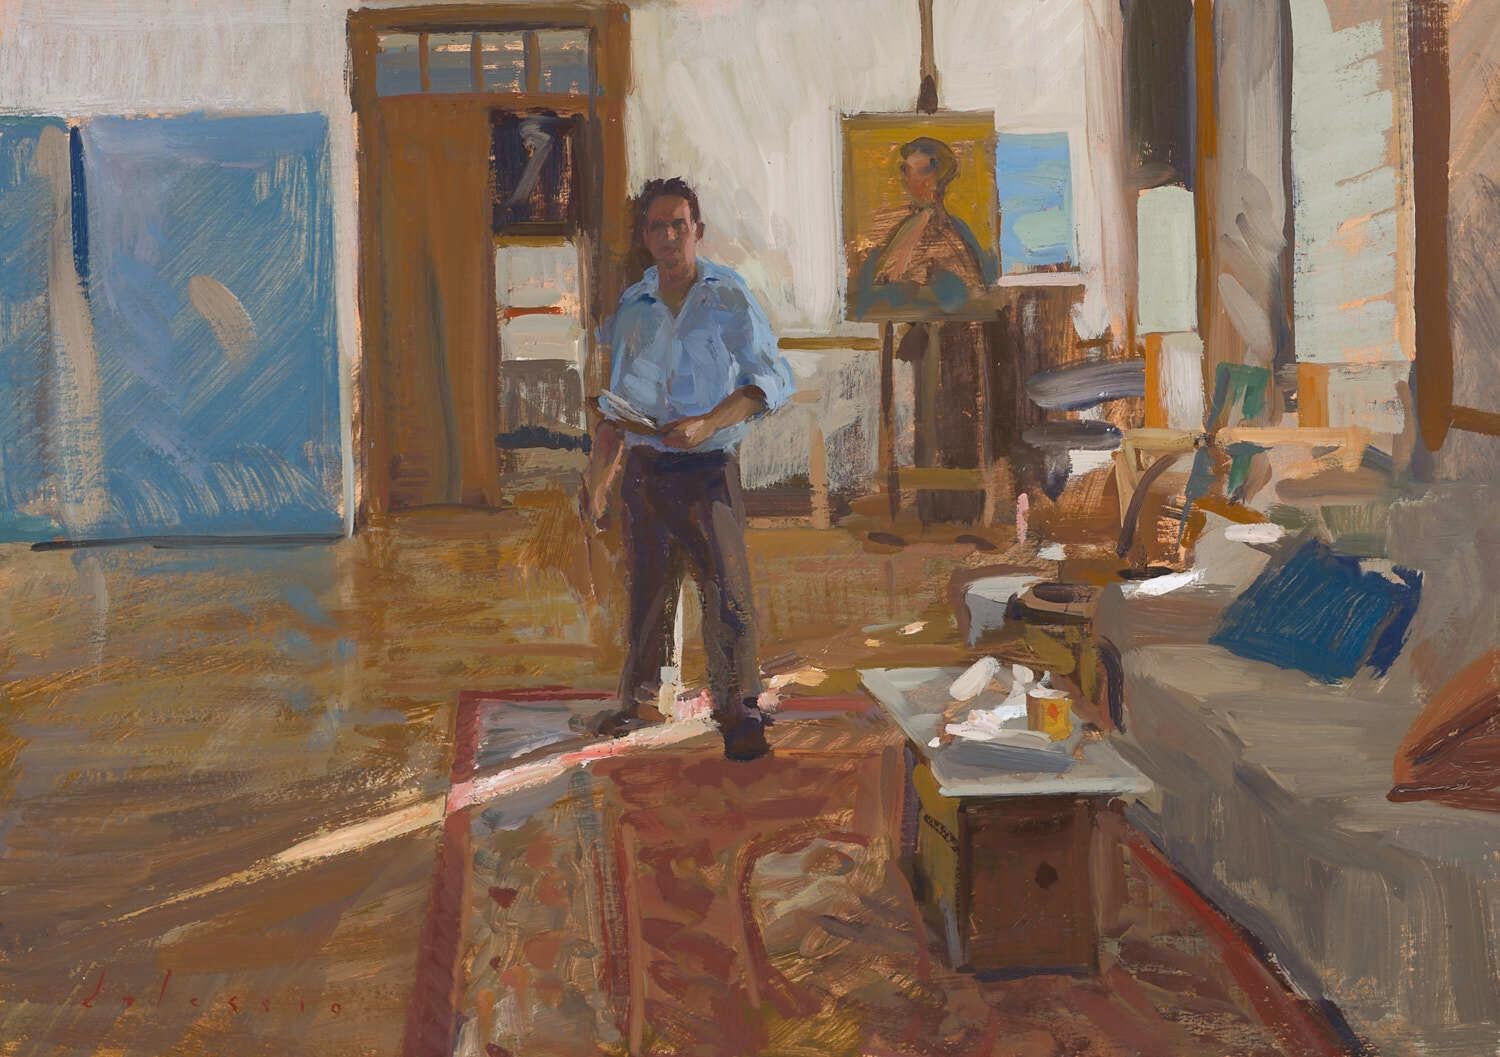 Marc Dalessio Figurative Painting - "Lockdown Self-Portrait" contemporary realist portrait of artist in his studio